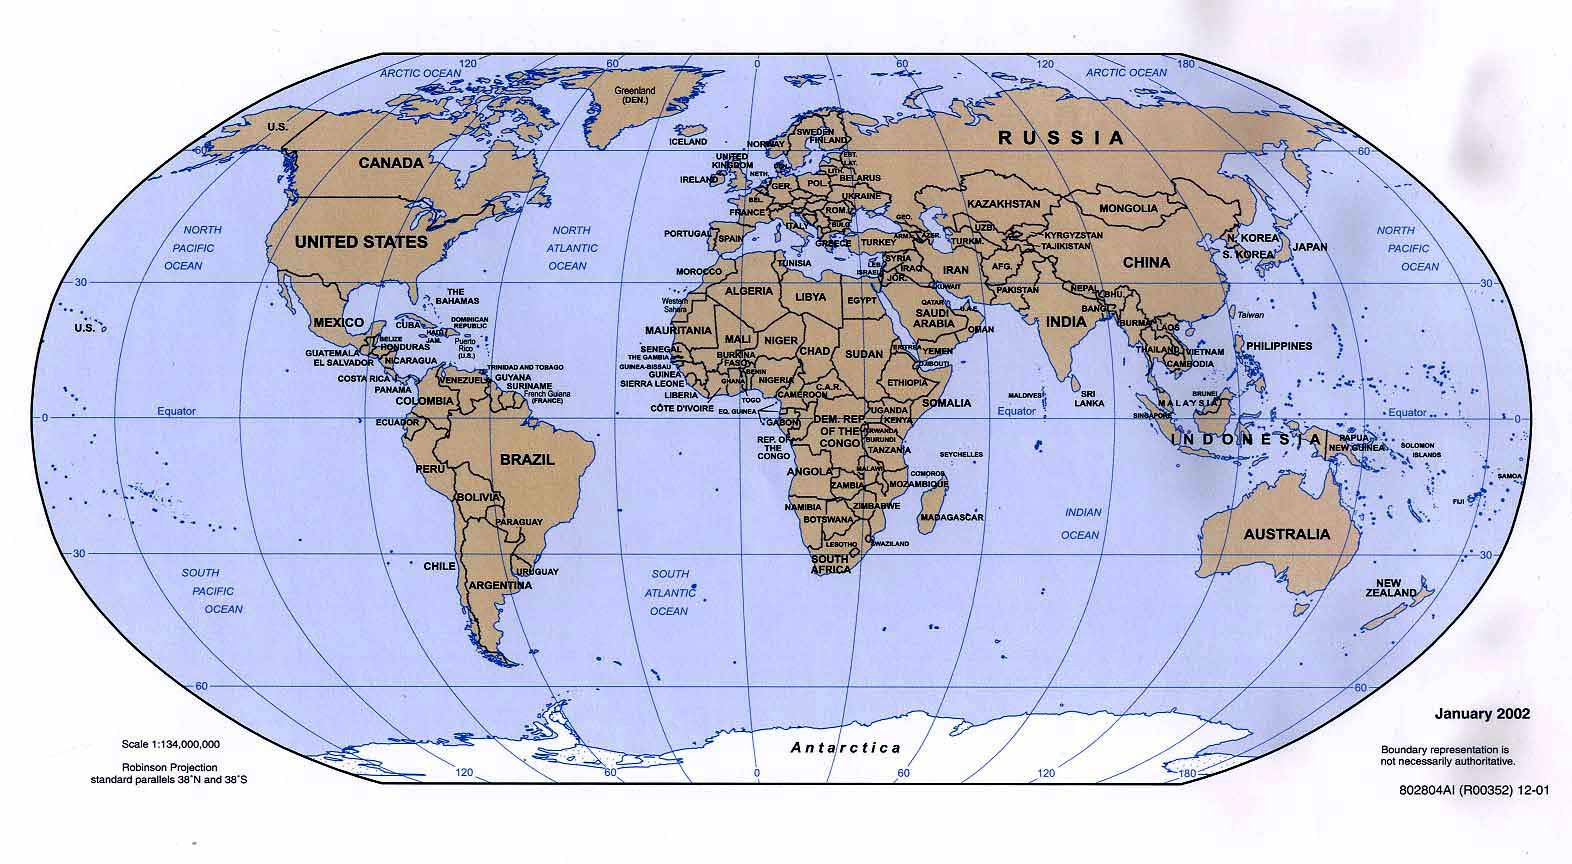 World Map With Equator